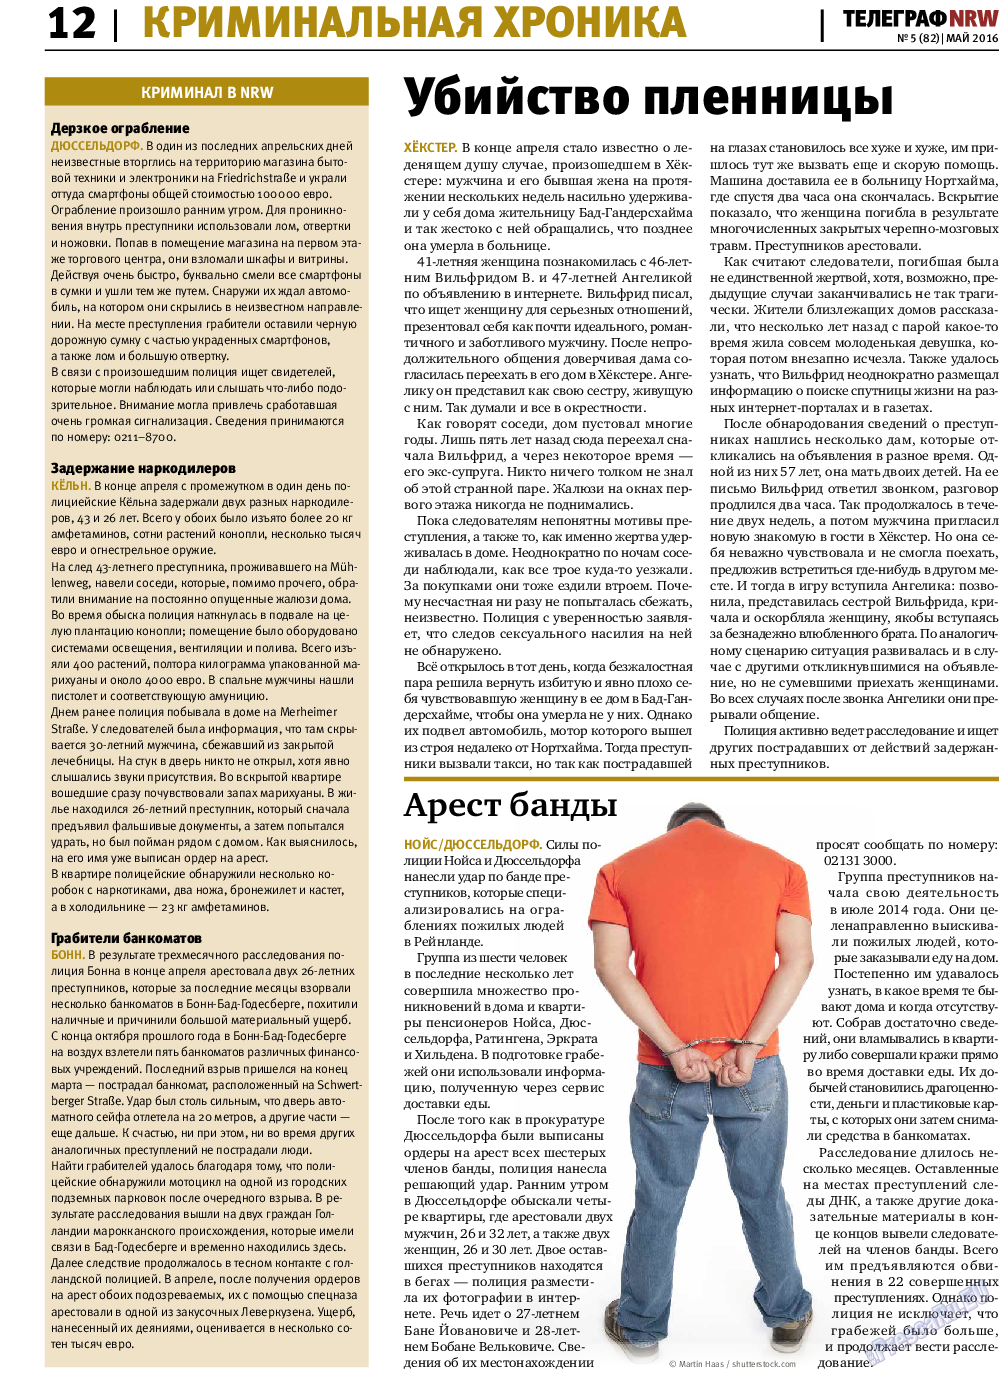 Телеграф NRW, газета. 2016 №5 стр.12